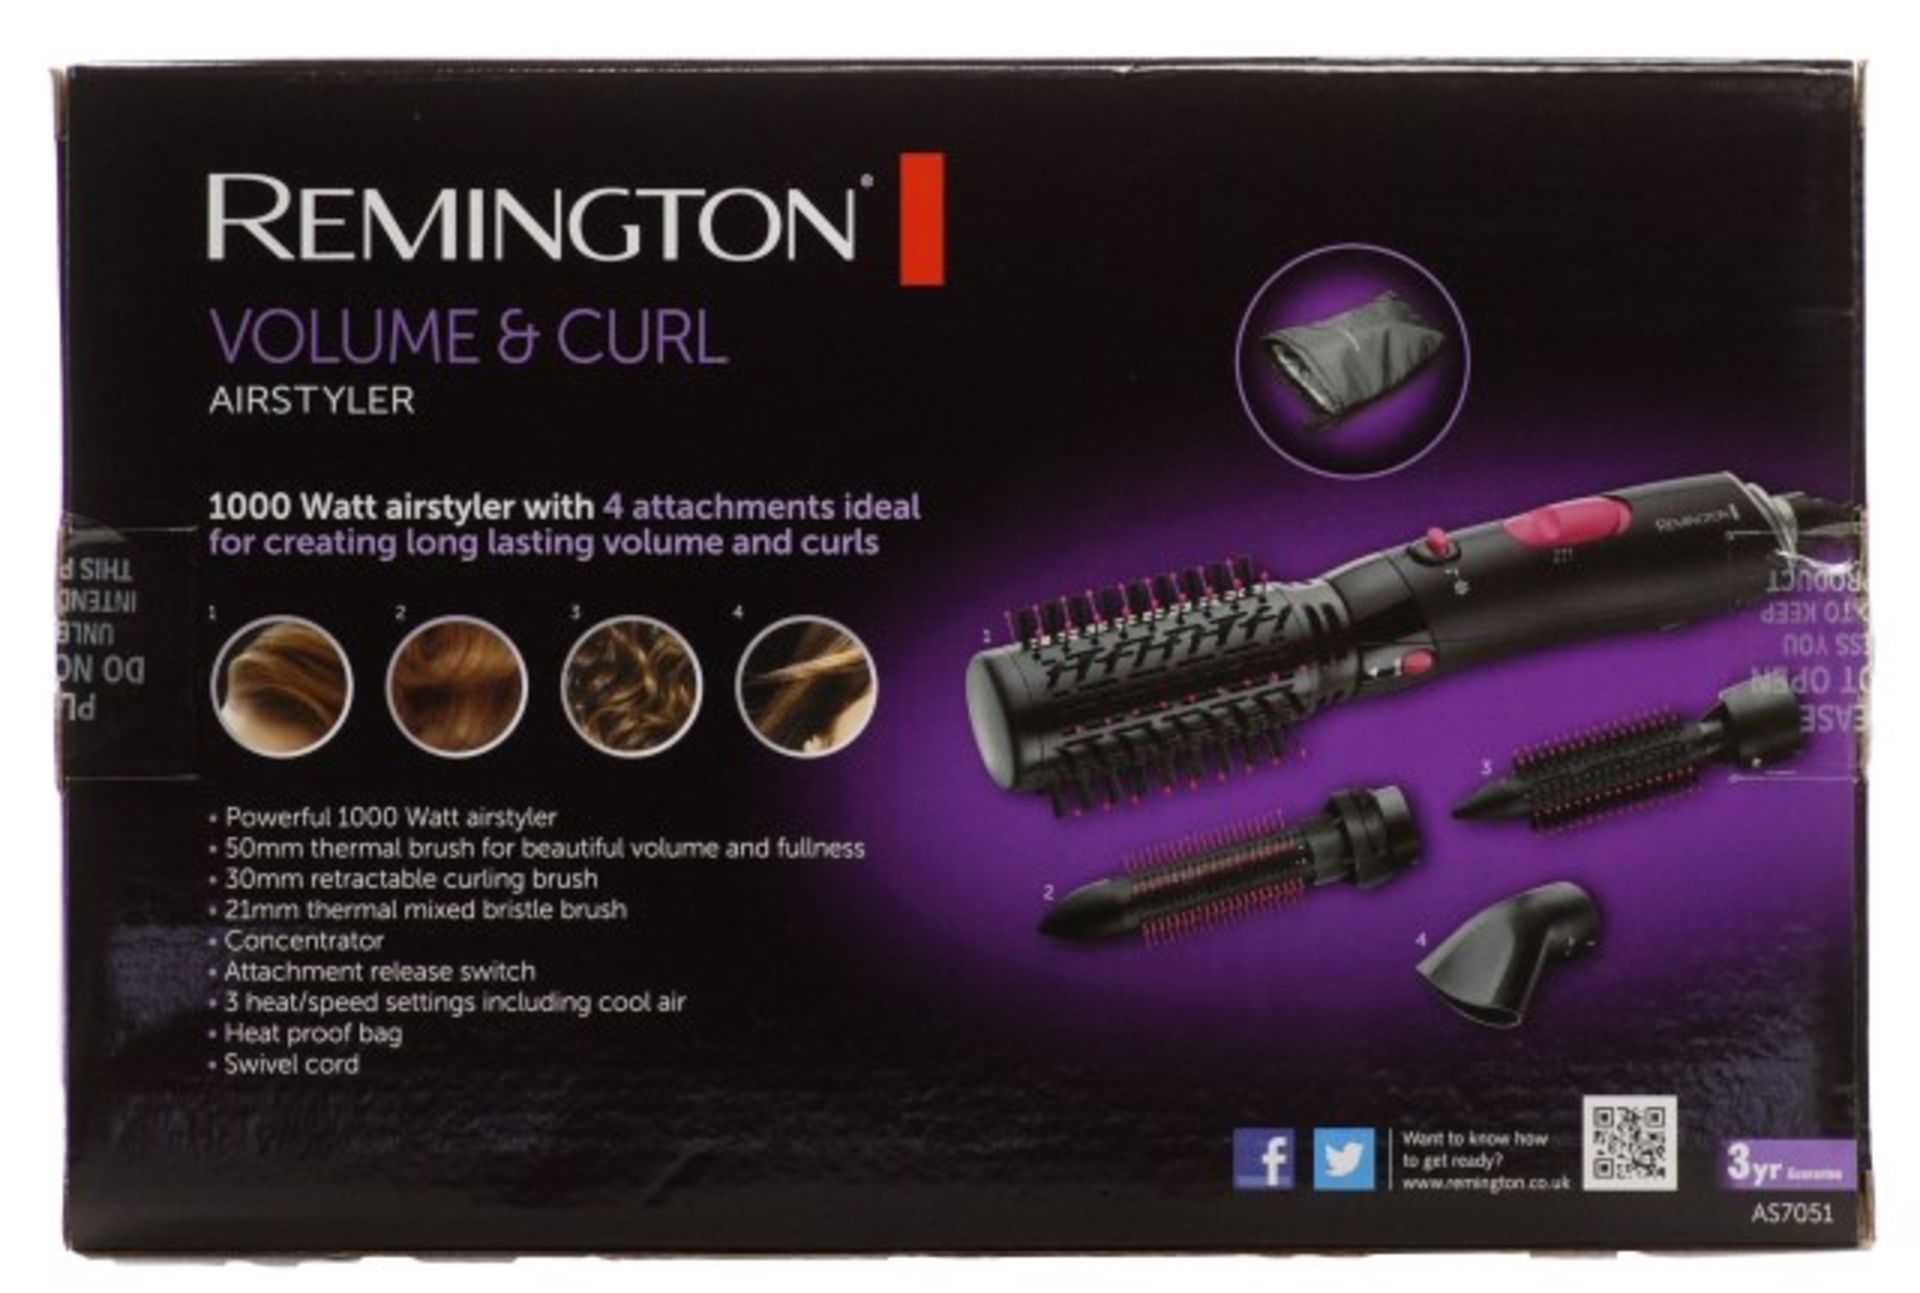 V *TRADE QTY* Grade B Remington Volume & Curl Airstyler RRP 29.99 X 4 YOUR BID PRICE TO BE